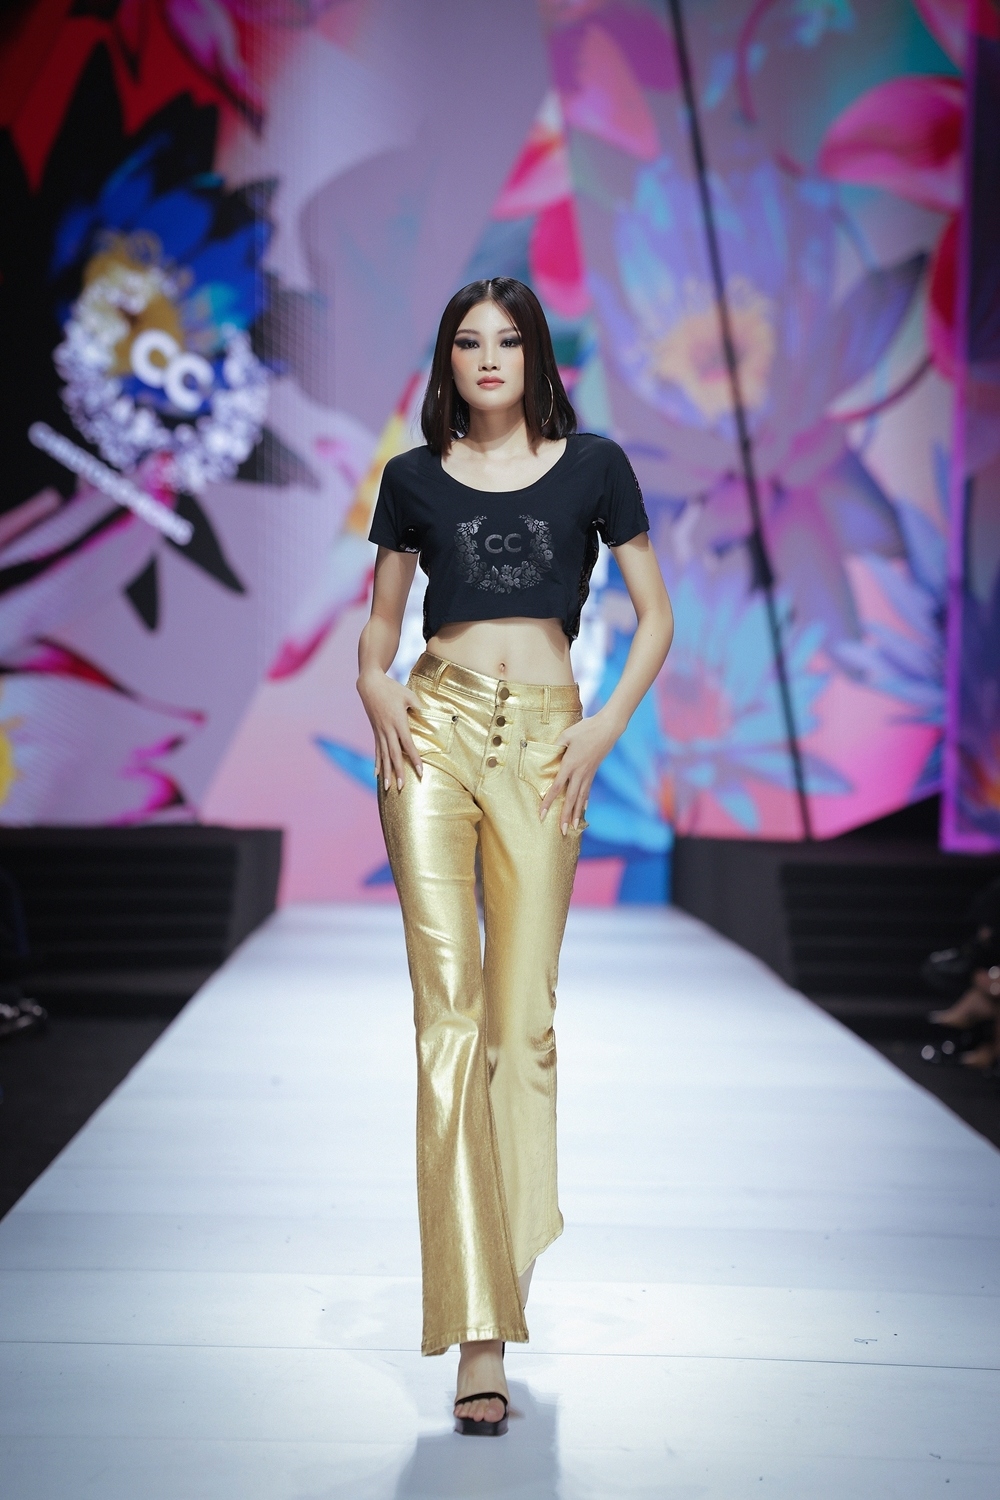 australian designer s impressive collection closes vietnam int l fashion week picture 6